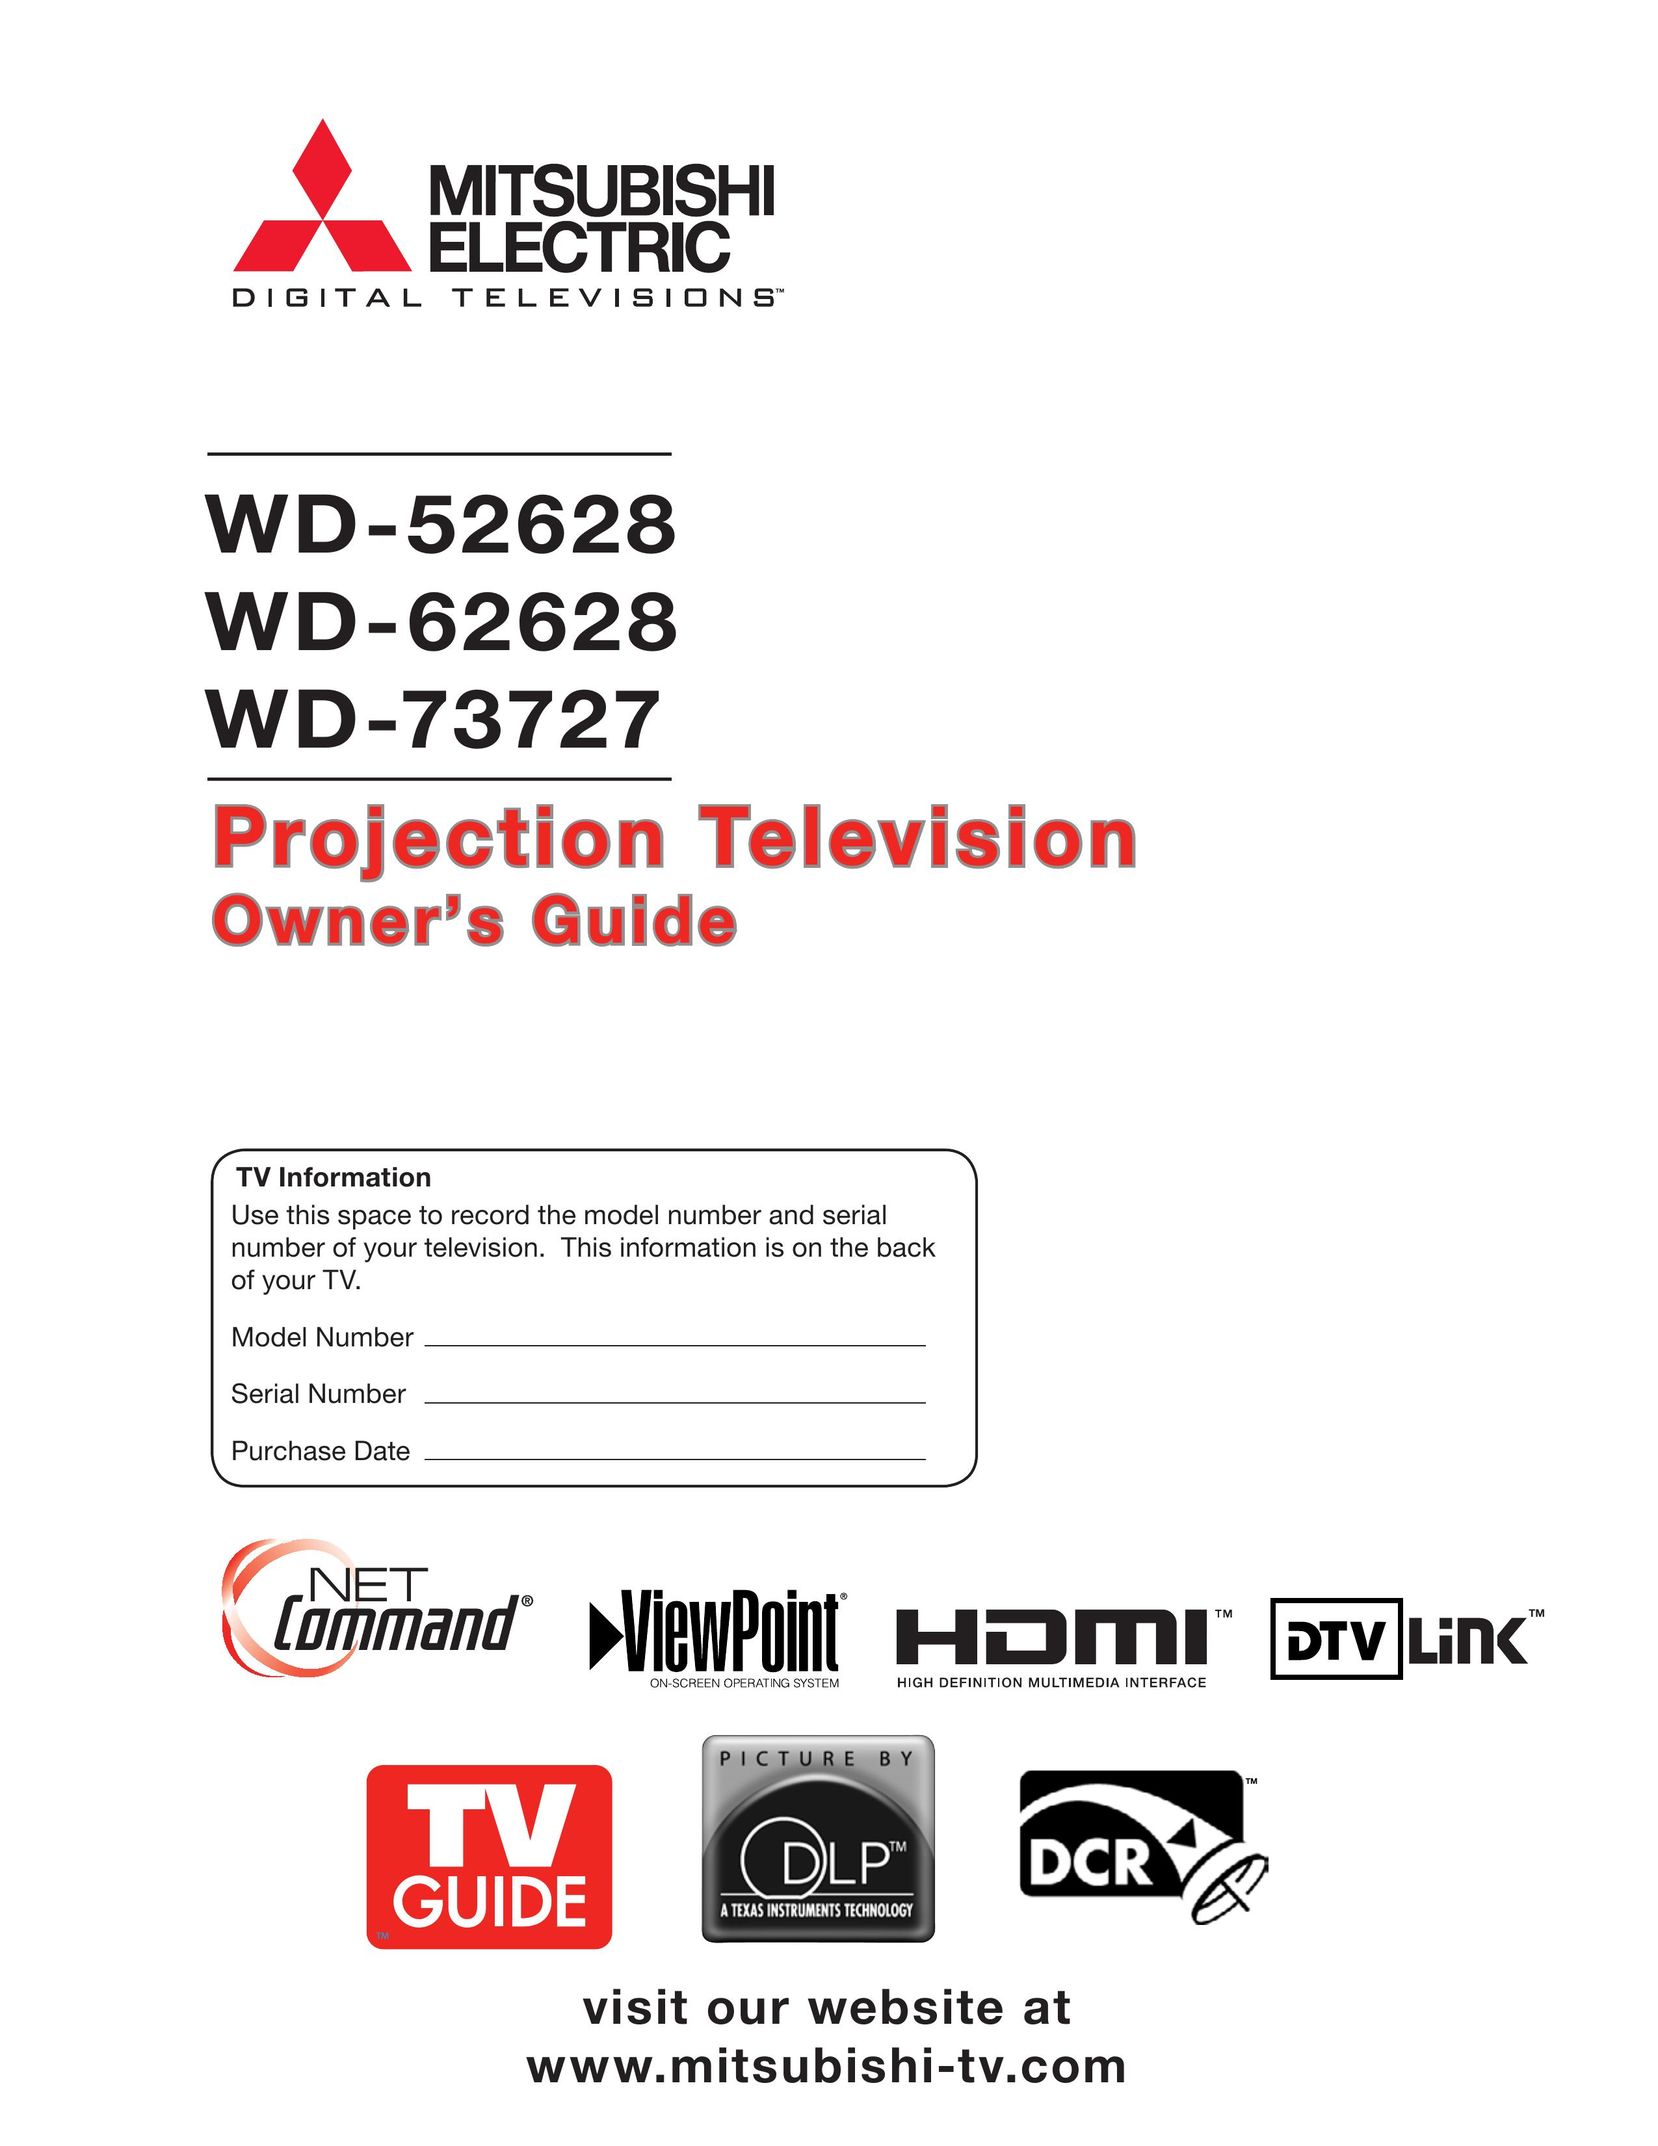 Mitsubishi Electronics WD-52628 Projection Television User Manual